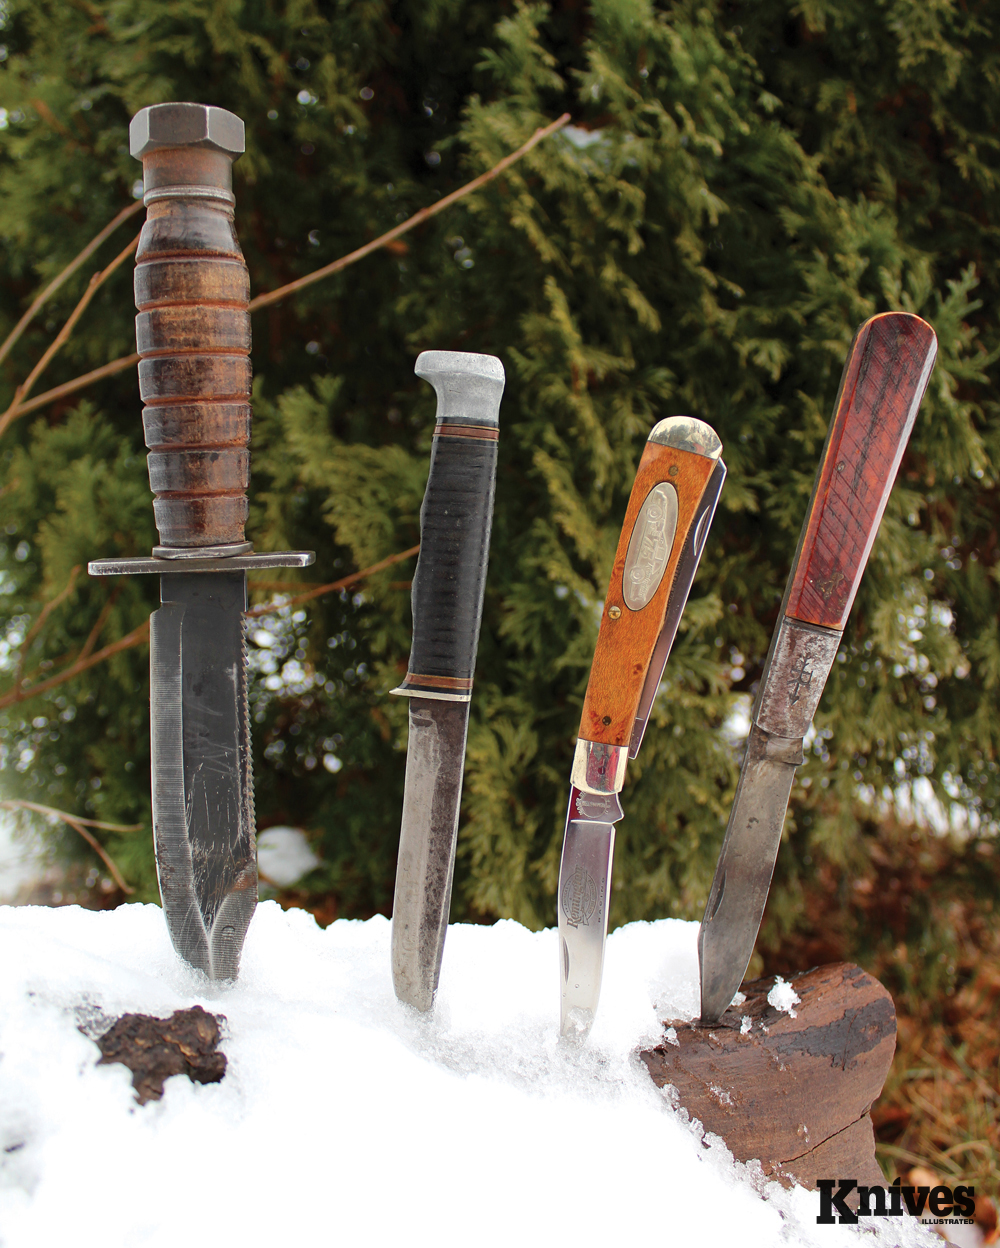 The author's four knives (left to right): OKC 499, KA-BAR Little Finn, Remington pocket knife, Russell Barlow